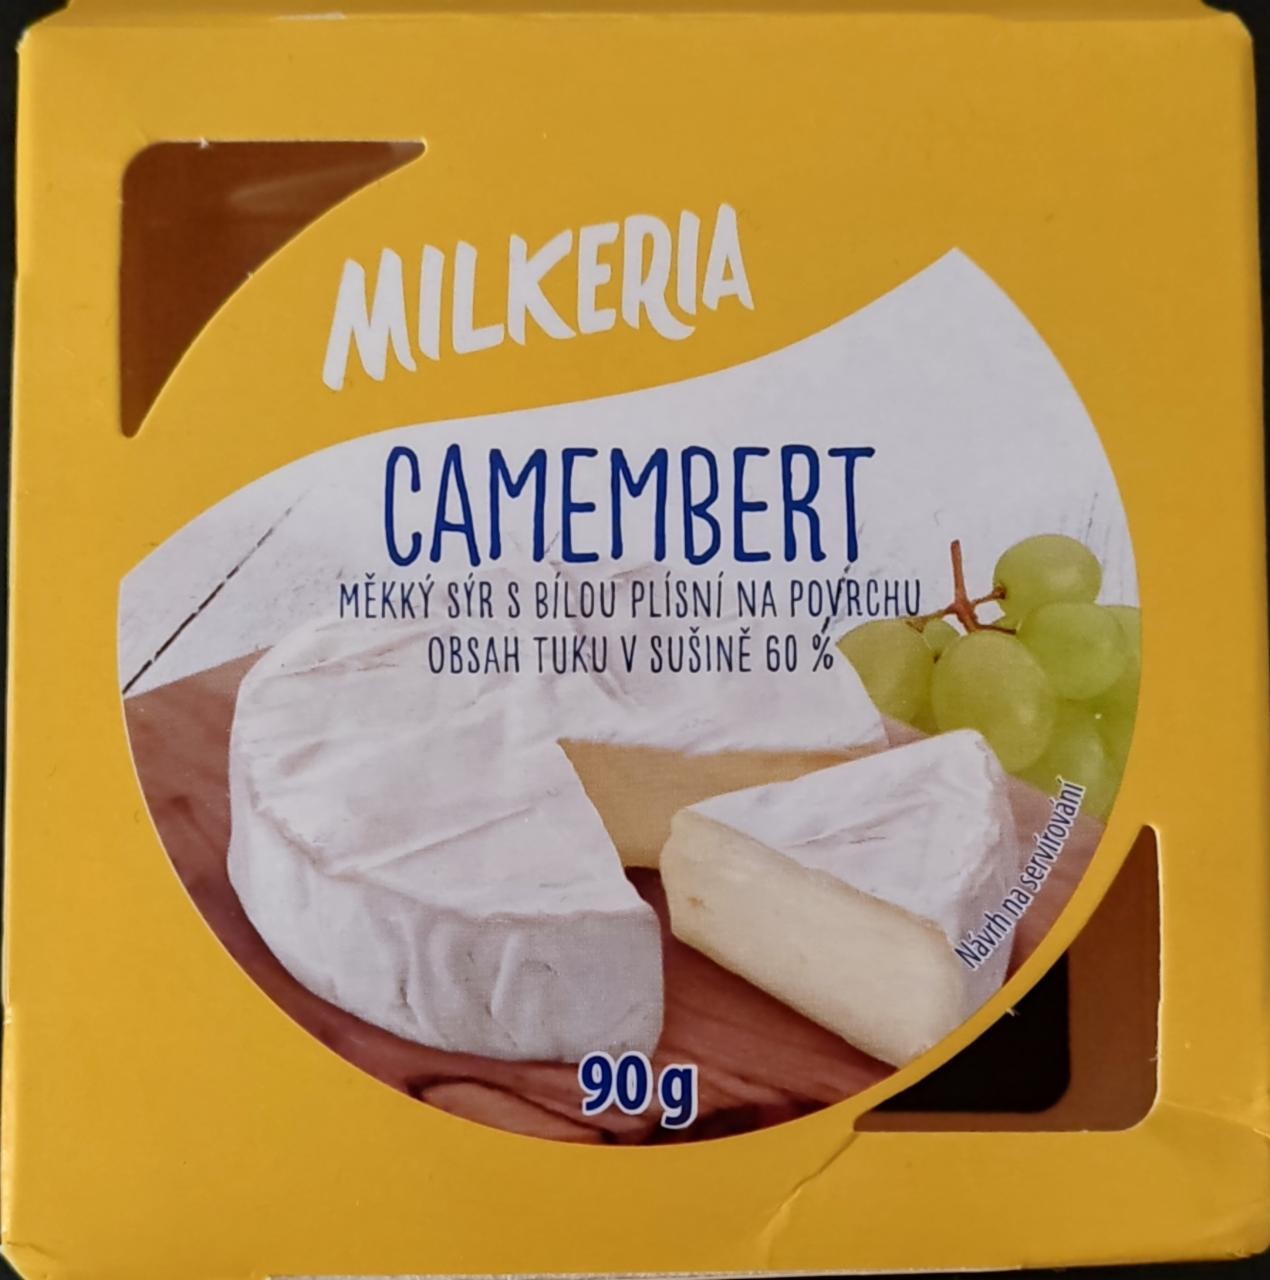 Fotografie - Camembert 60% Milkeria